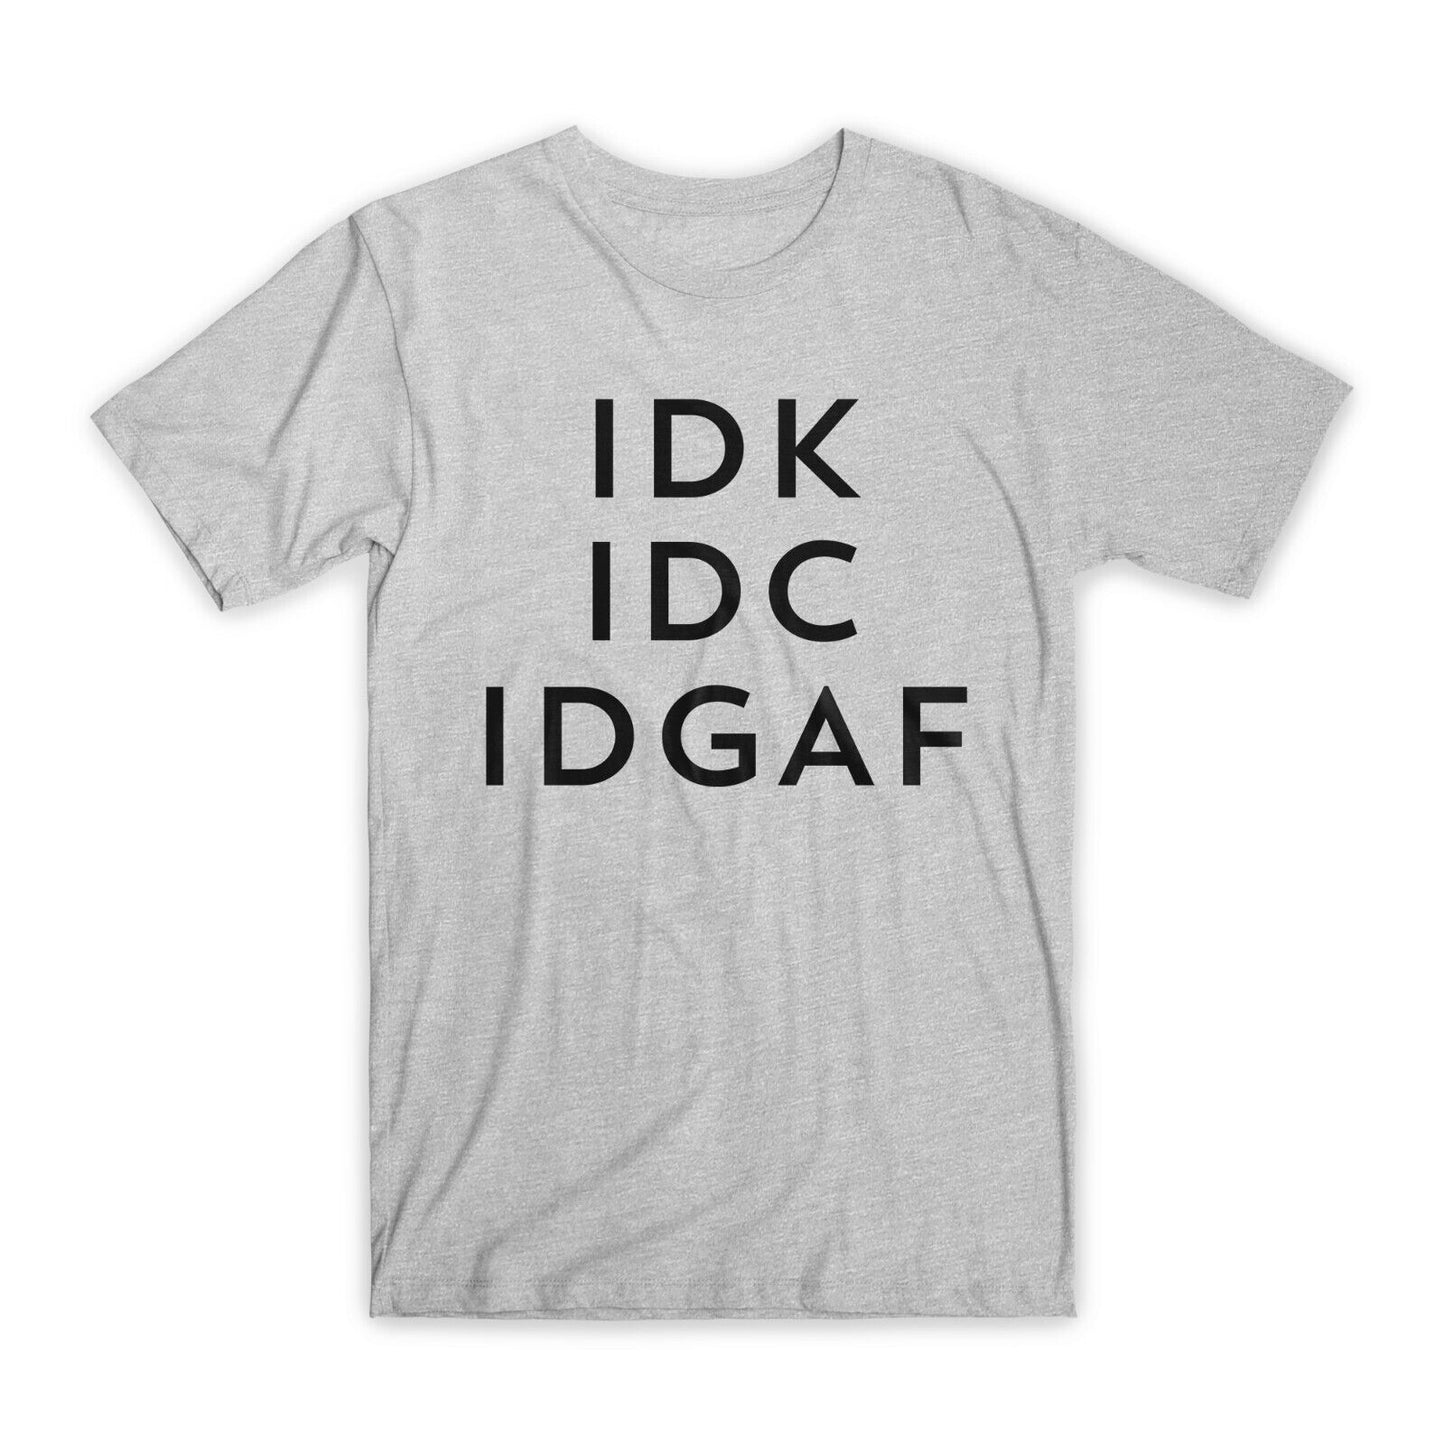 IDK IDC IDGAF T-Shirt Premium Soft Cotton Crew Neck Funny Tees Novelty Gifts NEW